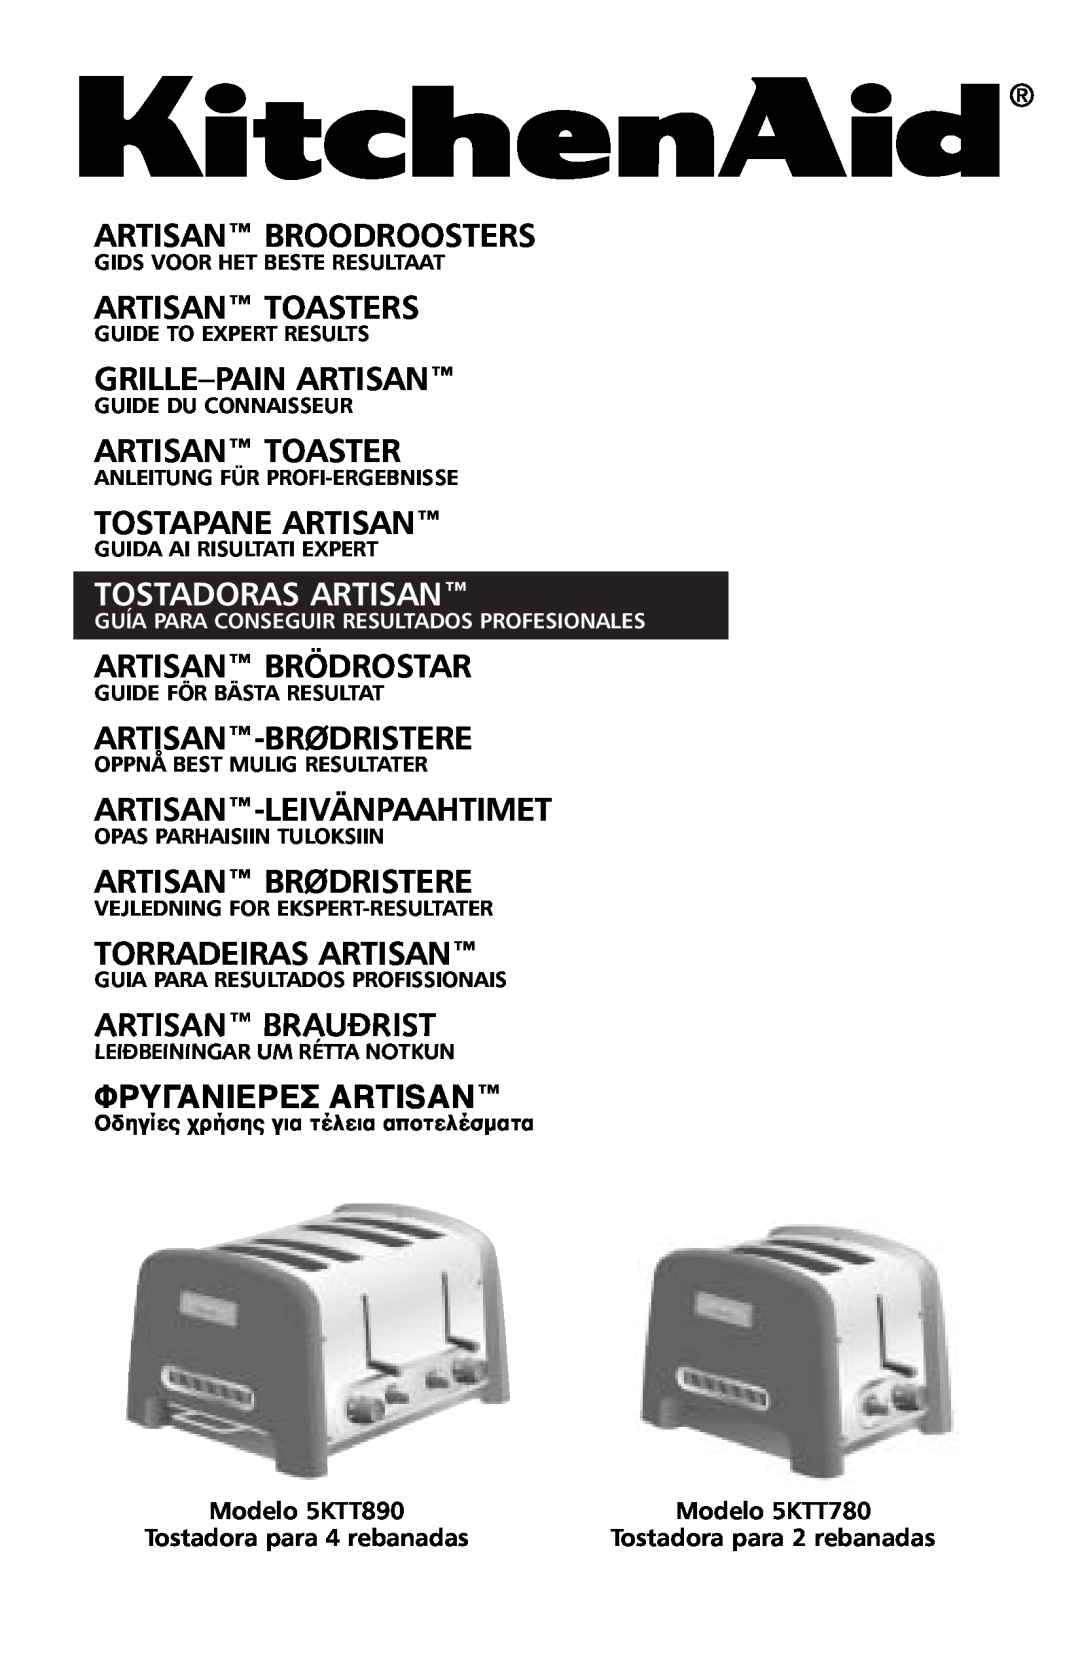 KitchenAid manual Tostadoras Artisan, Modelo 5KTT890, Modelo 5KTT780 